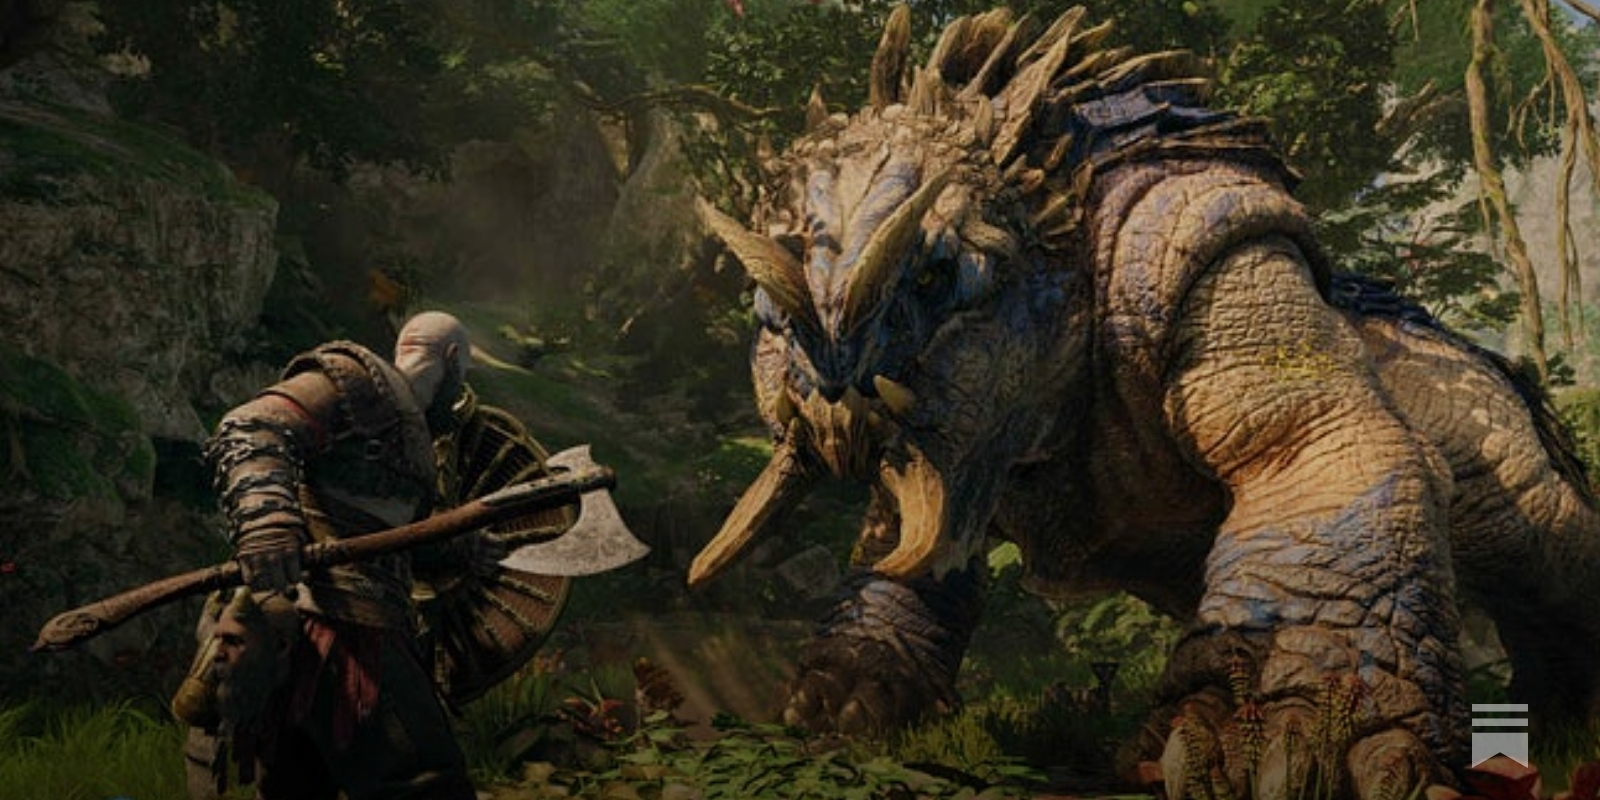 Sony's God of War Ragnarok Game Gets Positive Reviews - Bloomberg